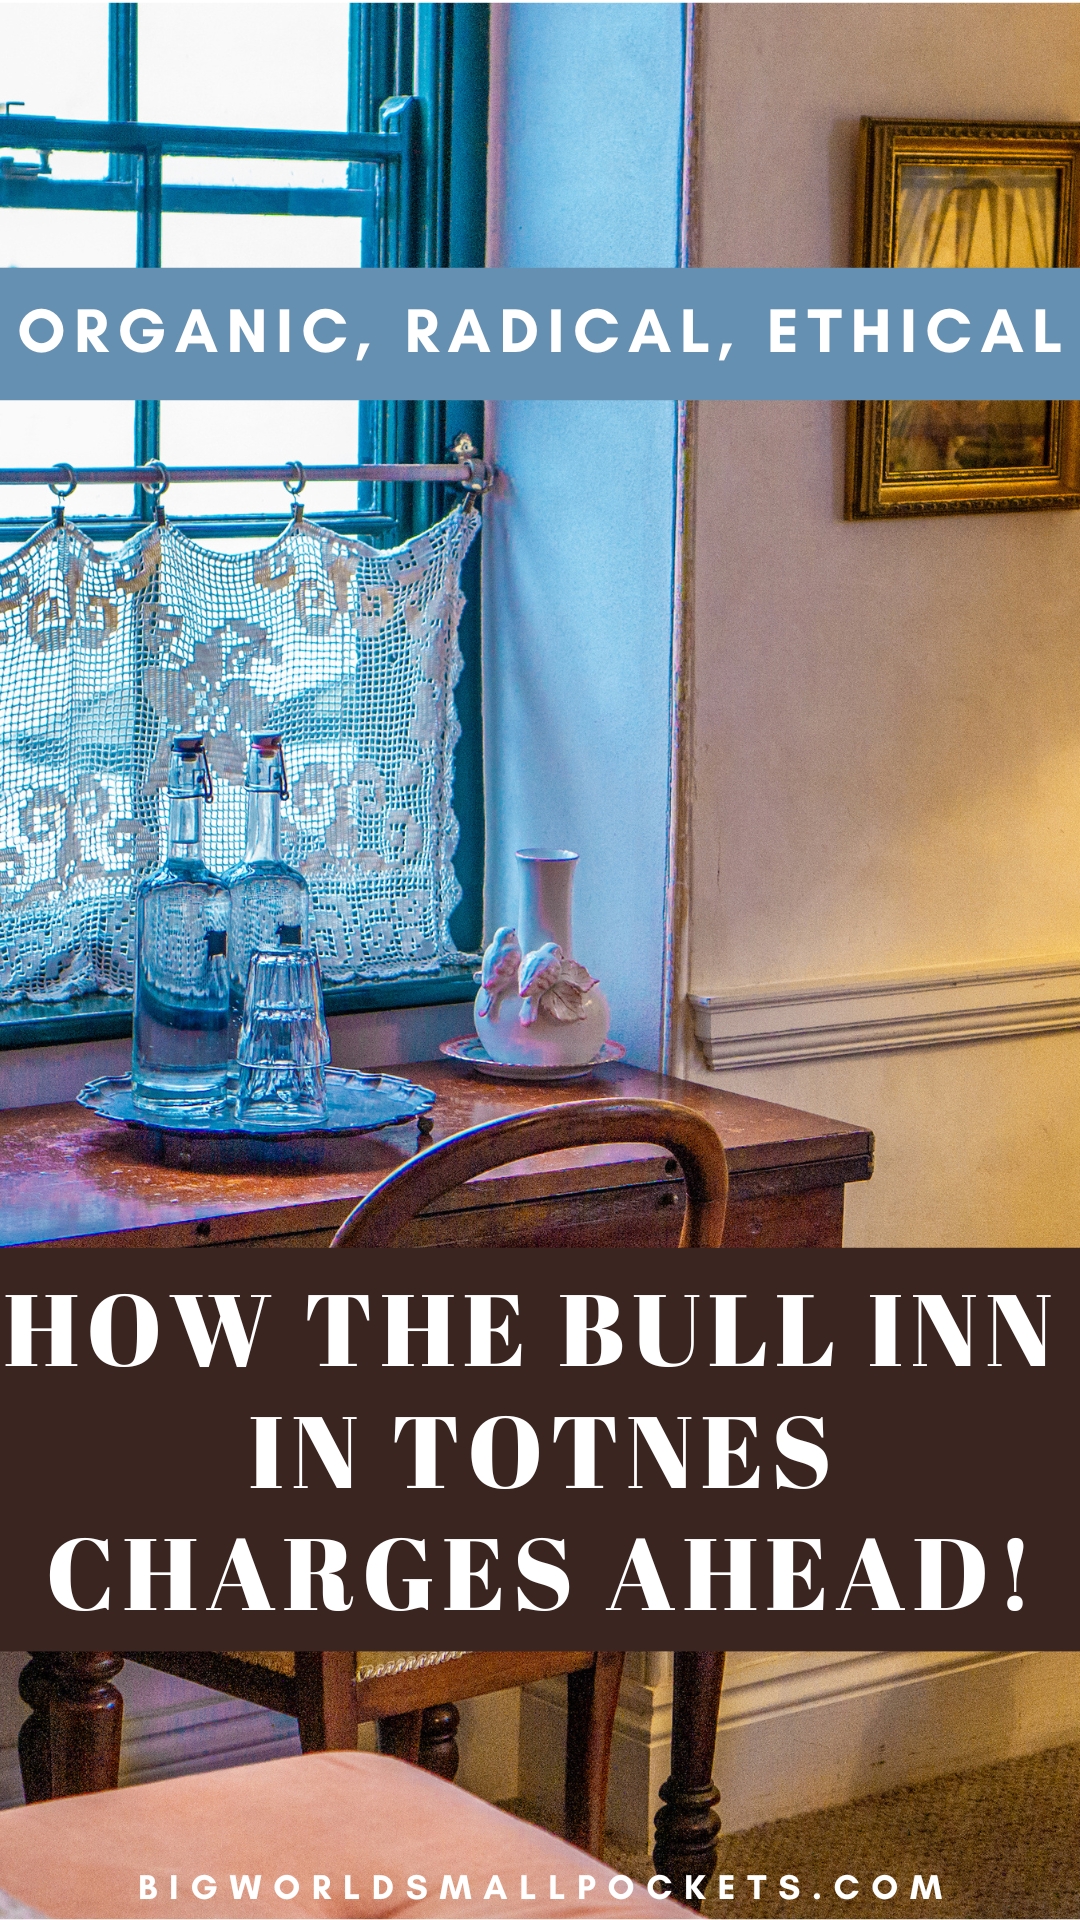 How the Bull Inn in Totnes, Devon Charges Ahead!